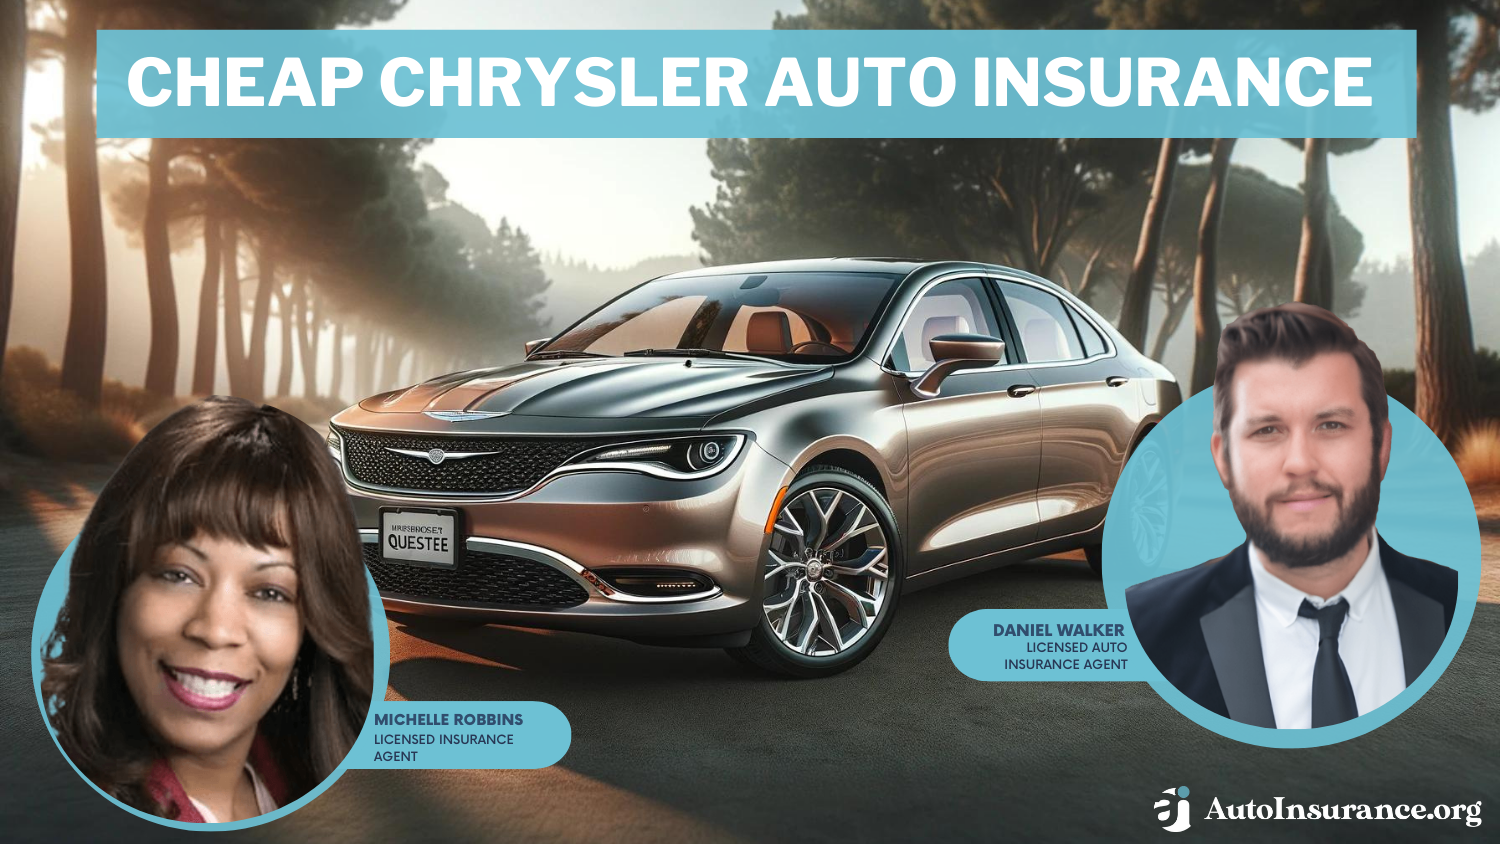 Cheap Chrysler Auto Insurance: Erie, Geico, State Farm